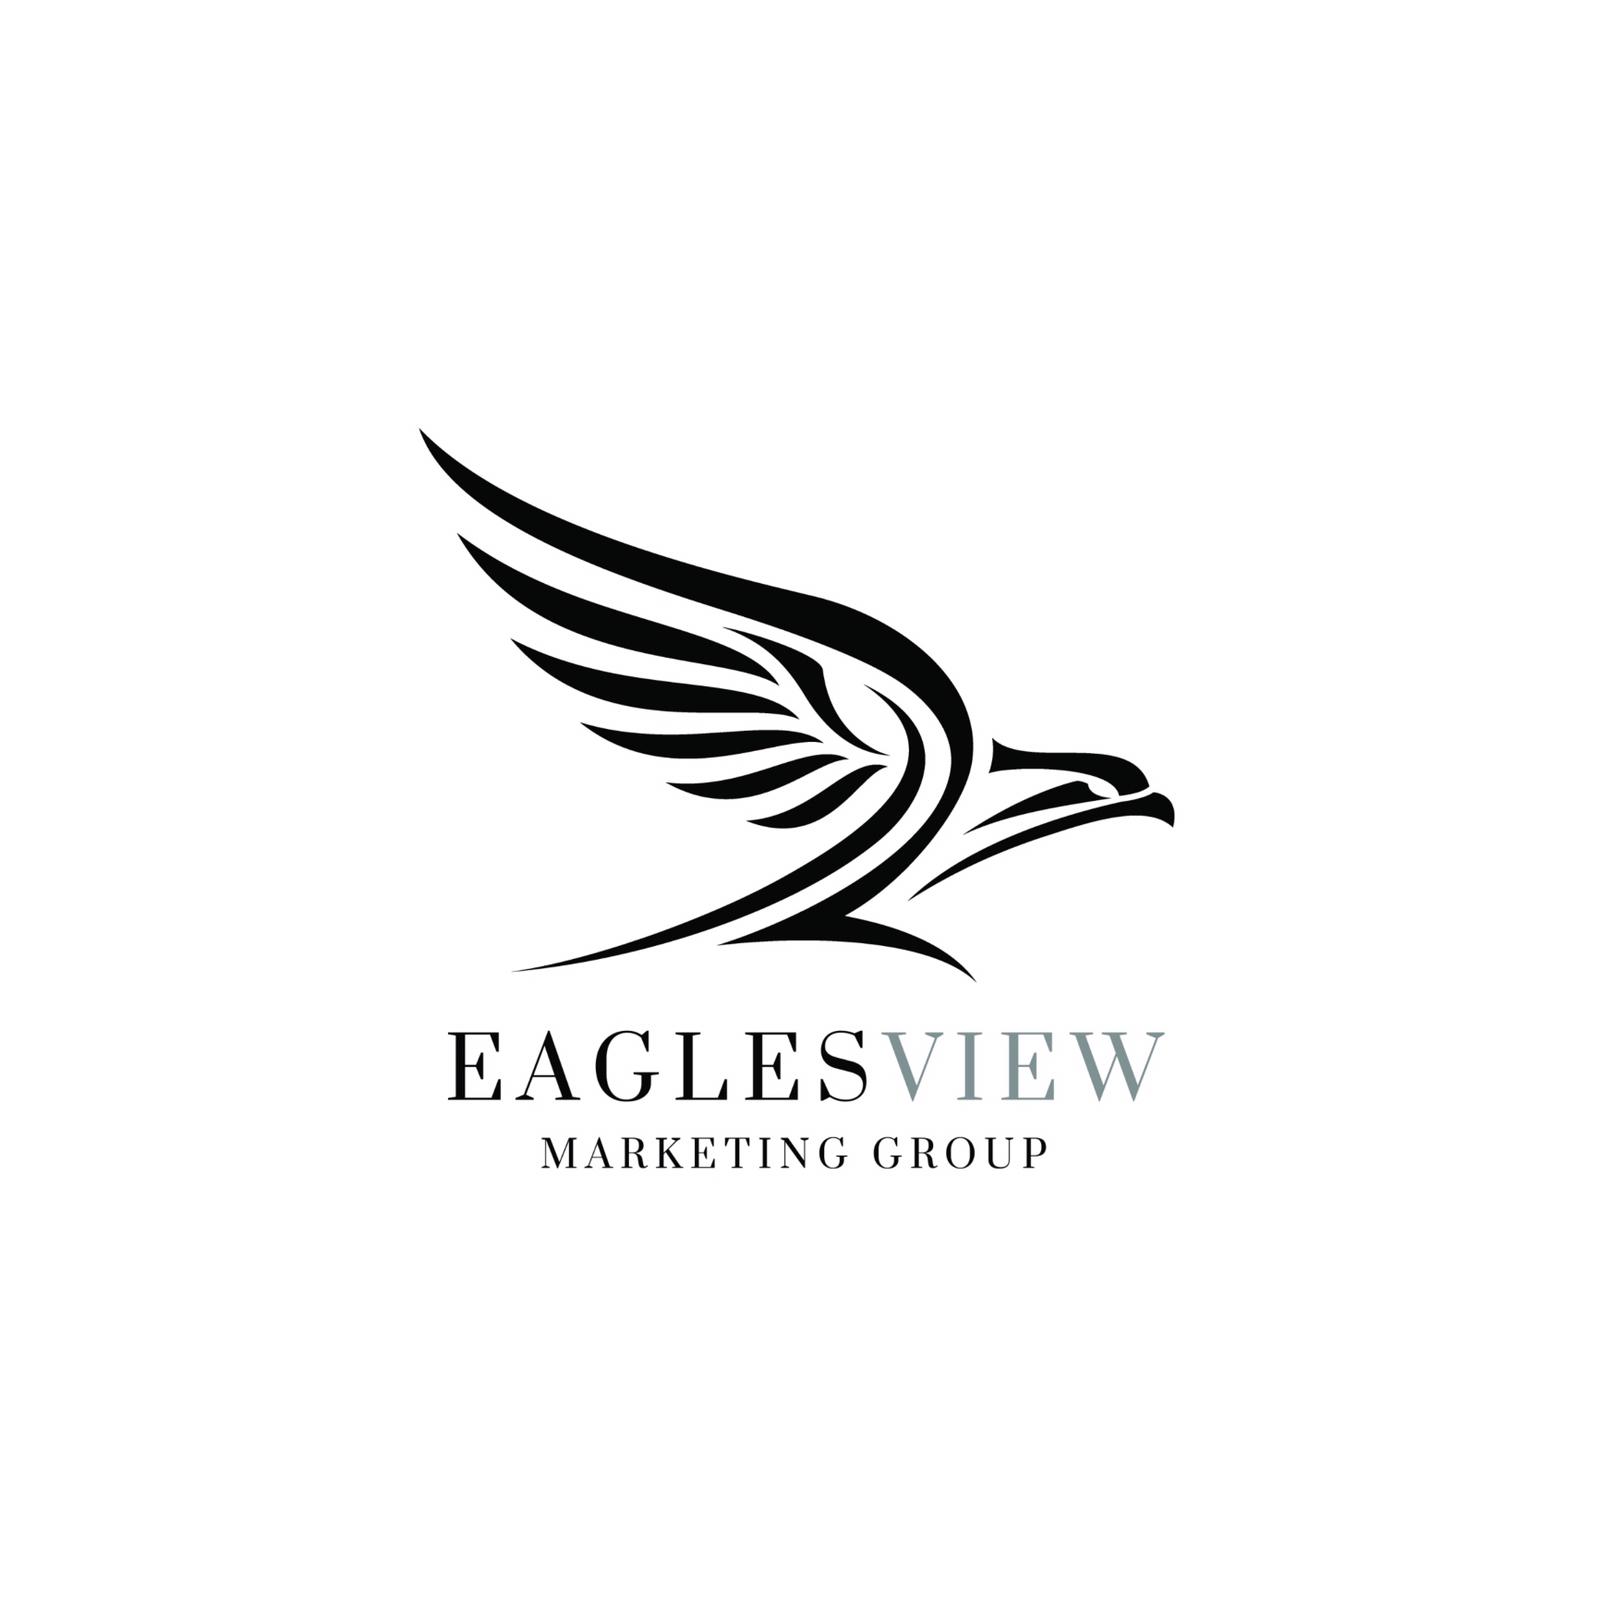 Eaglesview Marketing Group Pte. Ltd. company logo